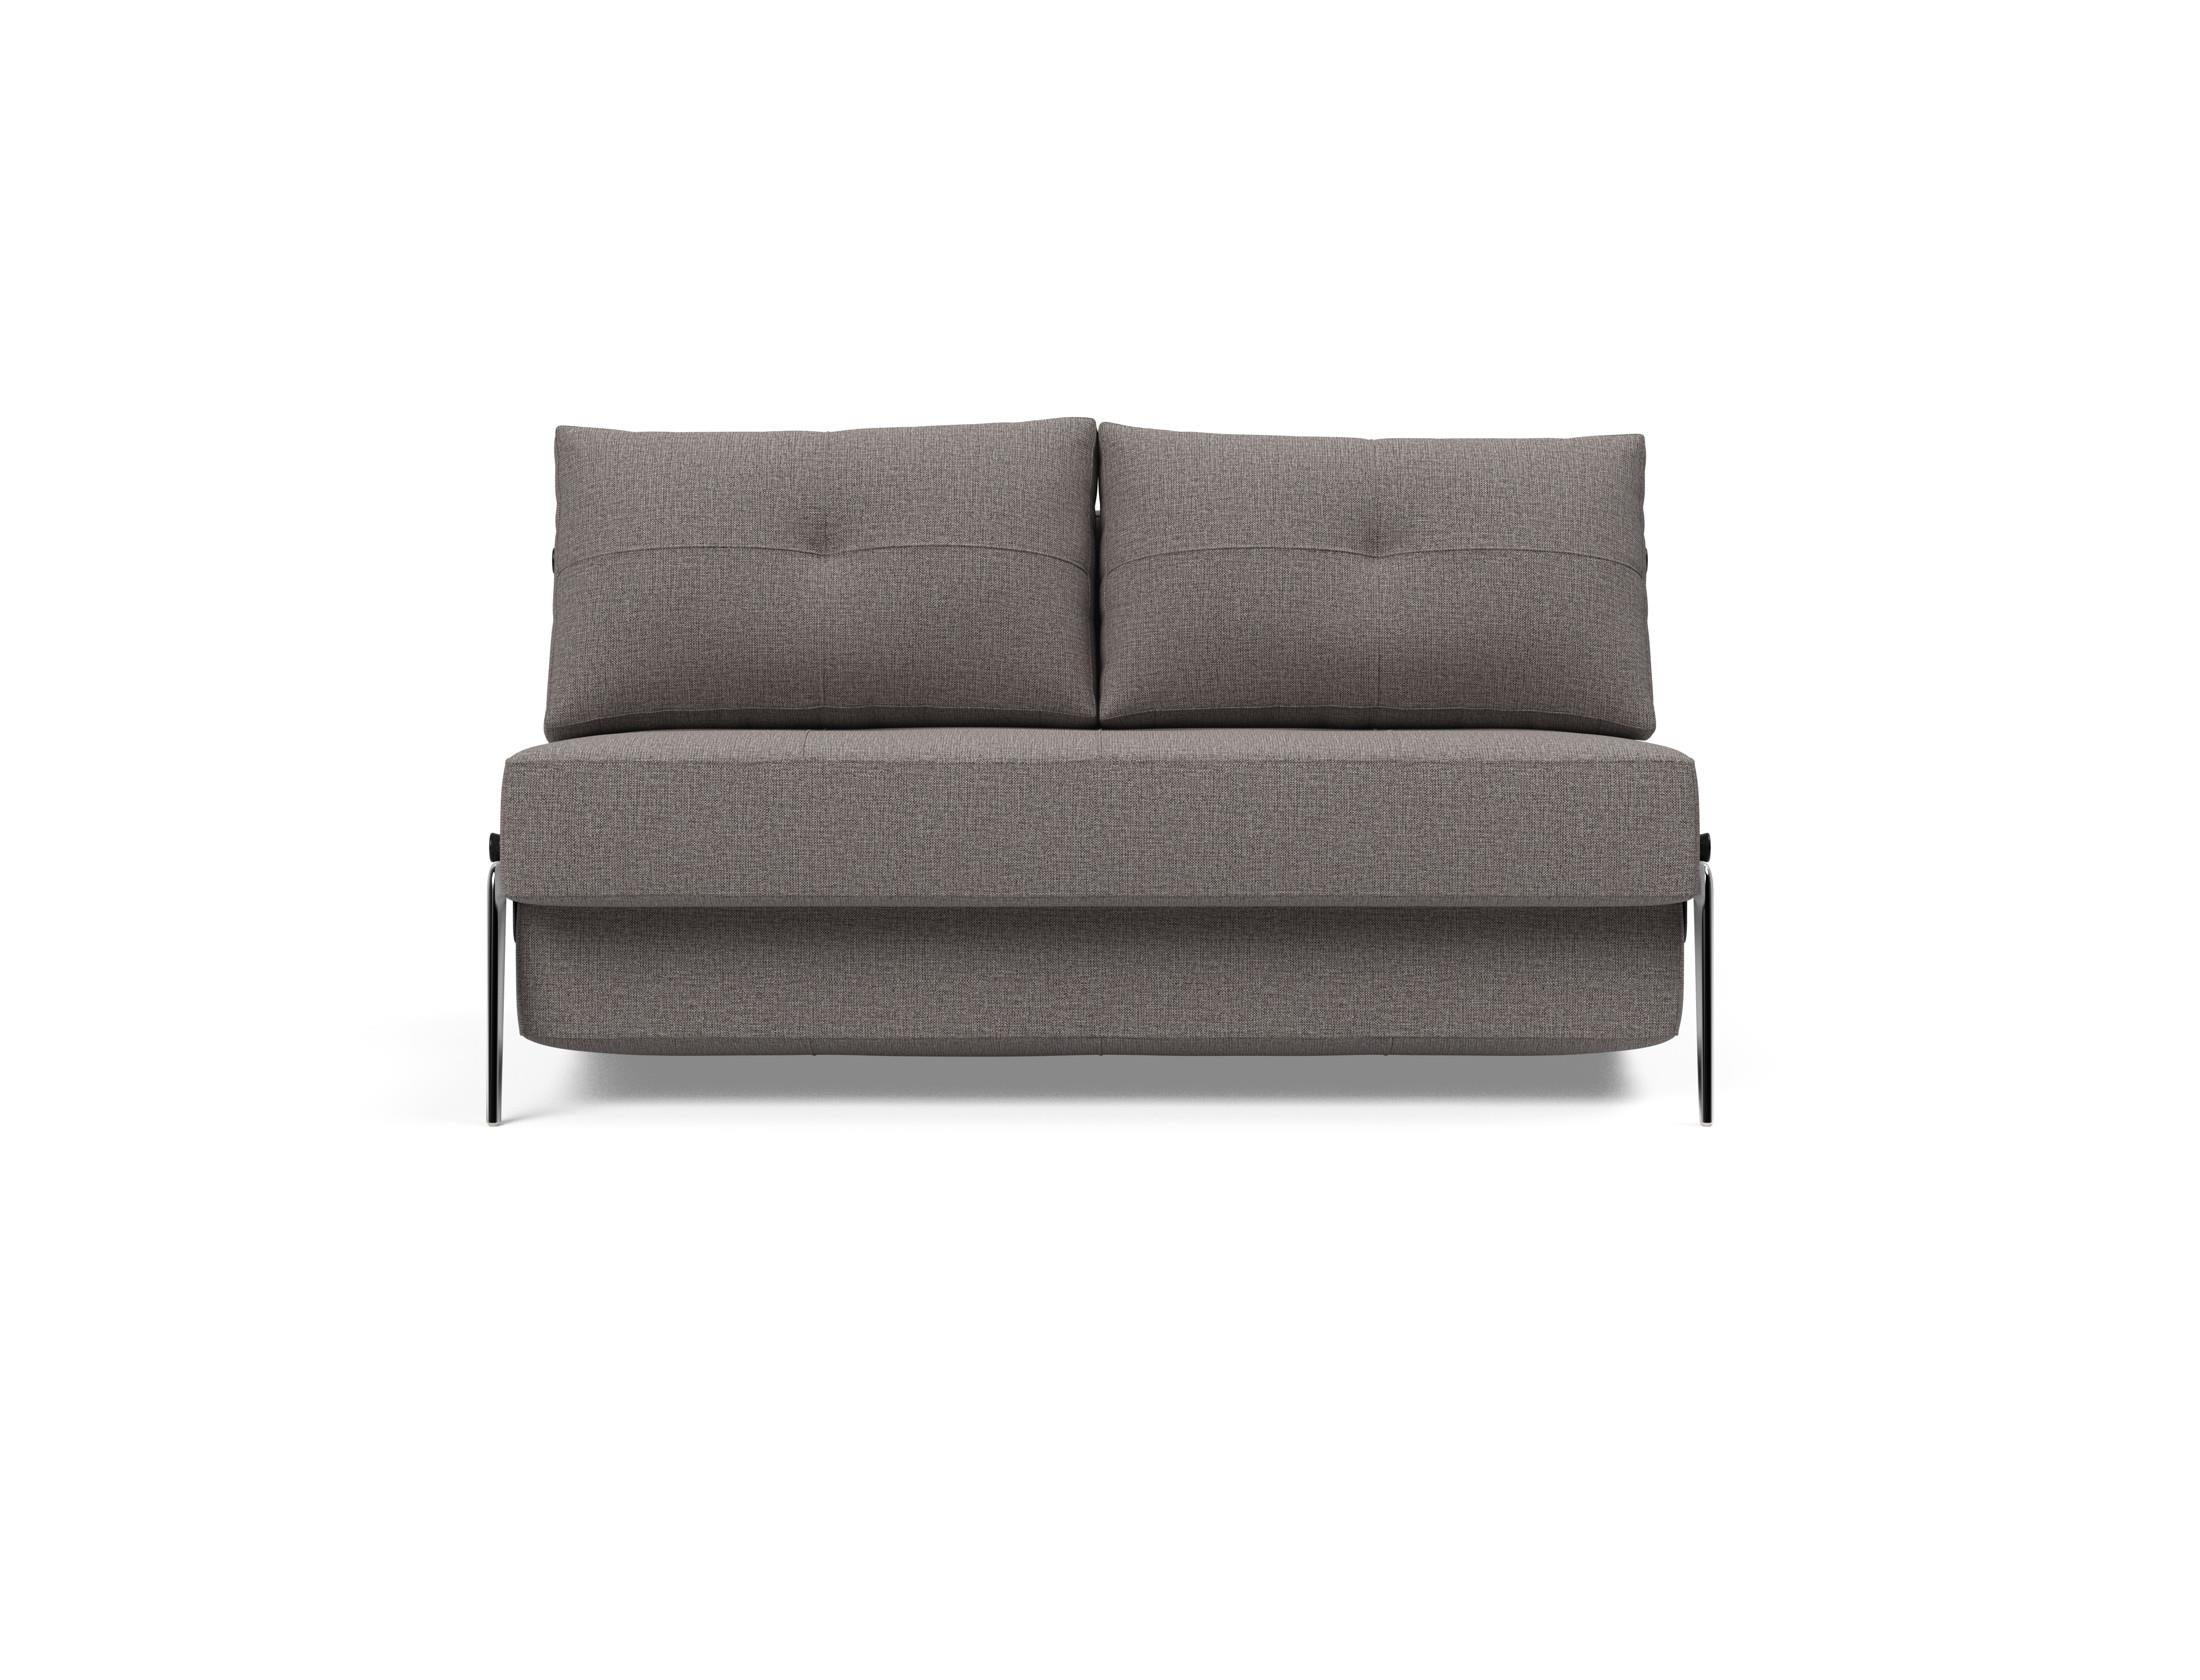 Cubed-Alu-Full-Size-Sofa-Bed-521-p1-web